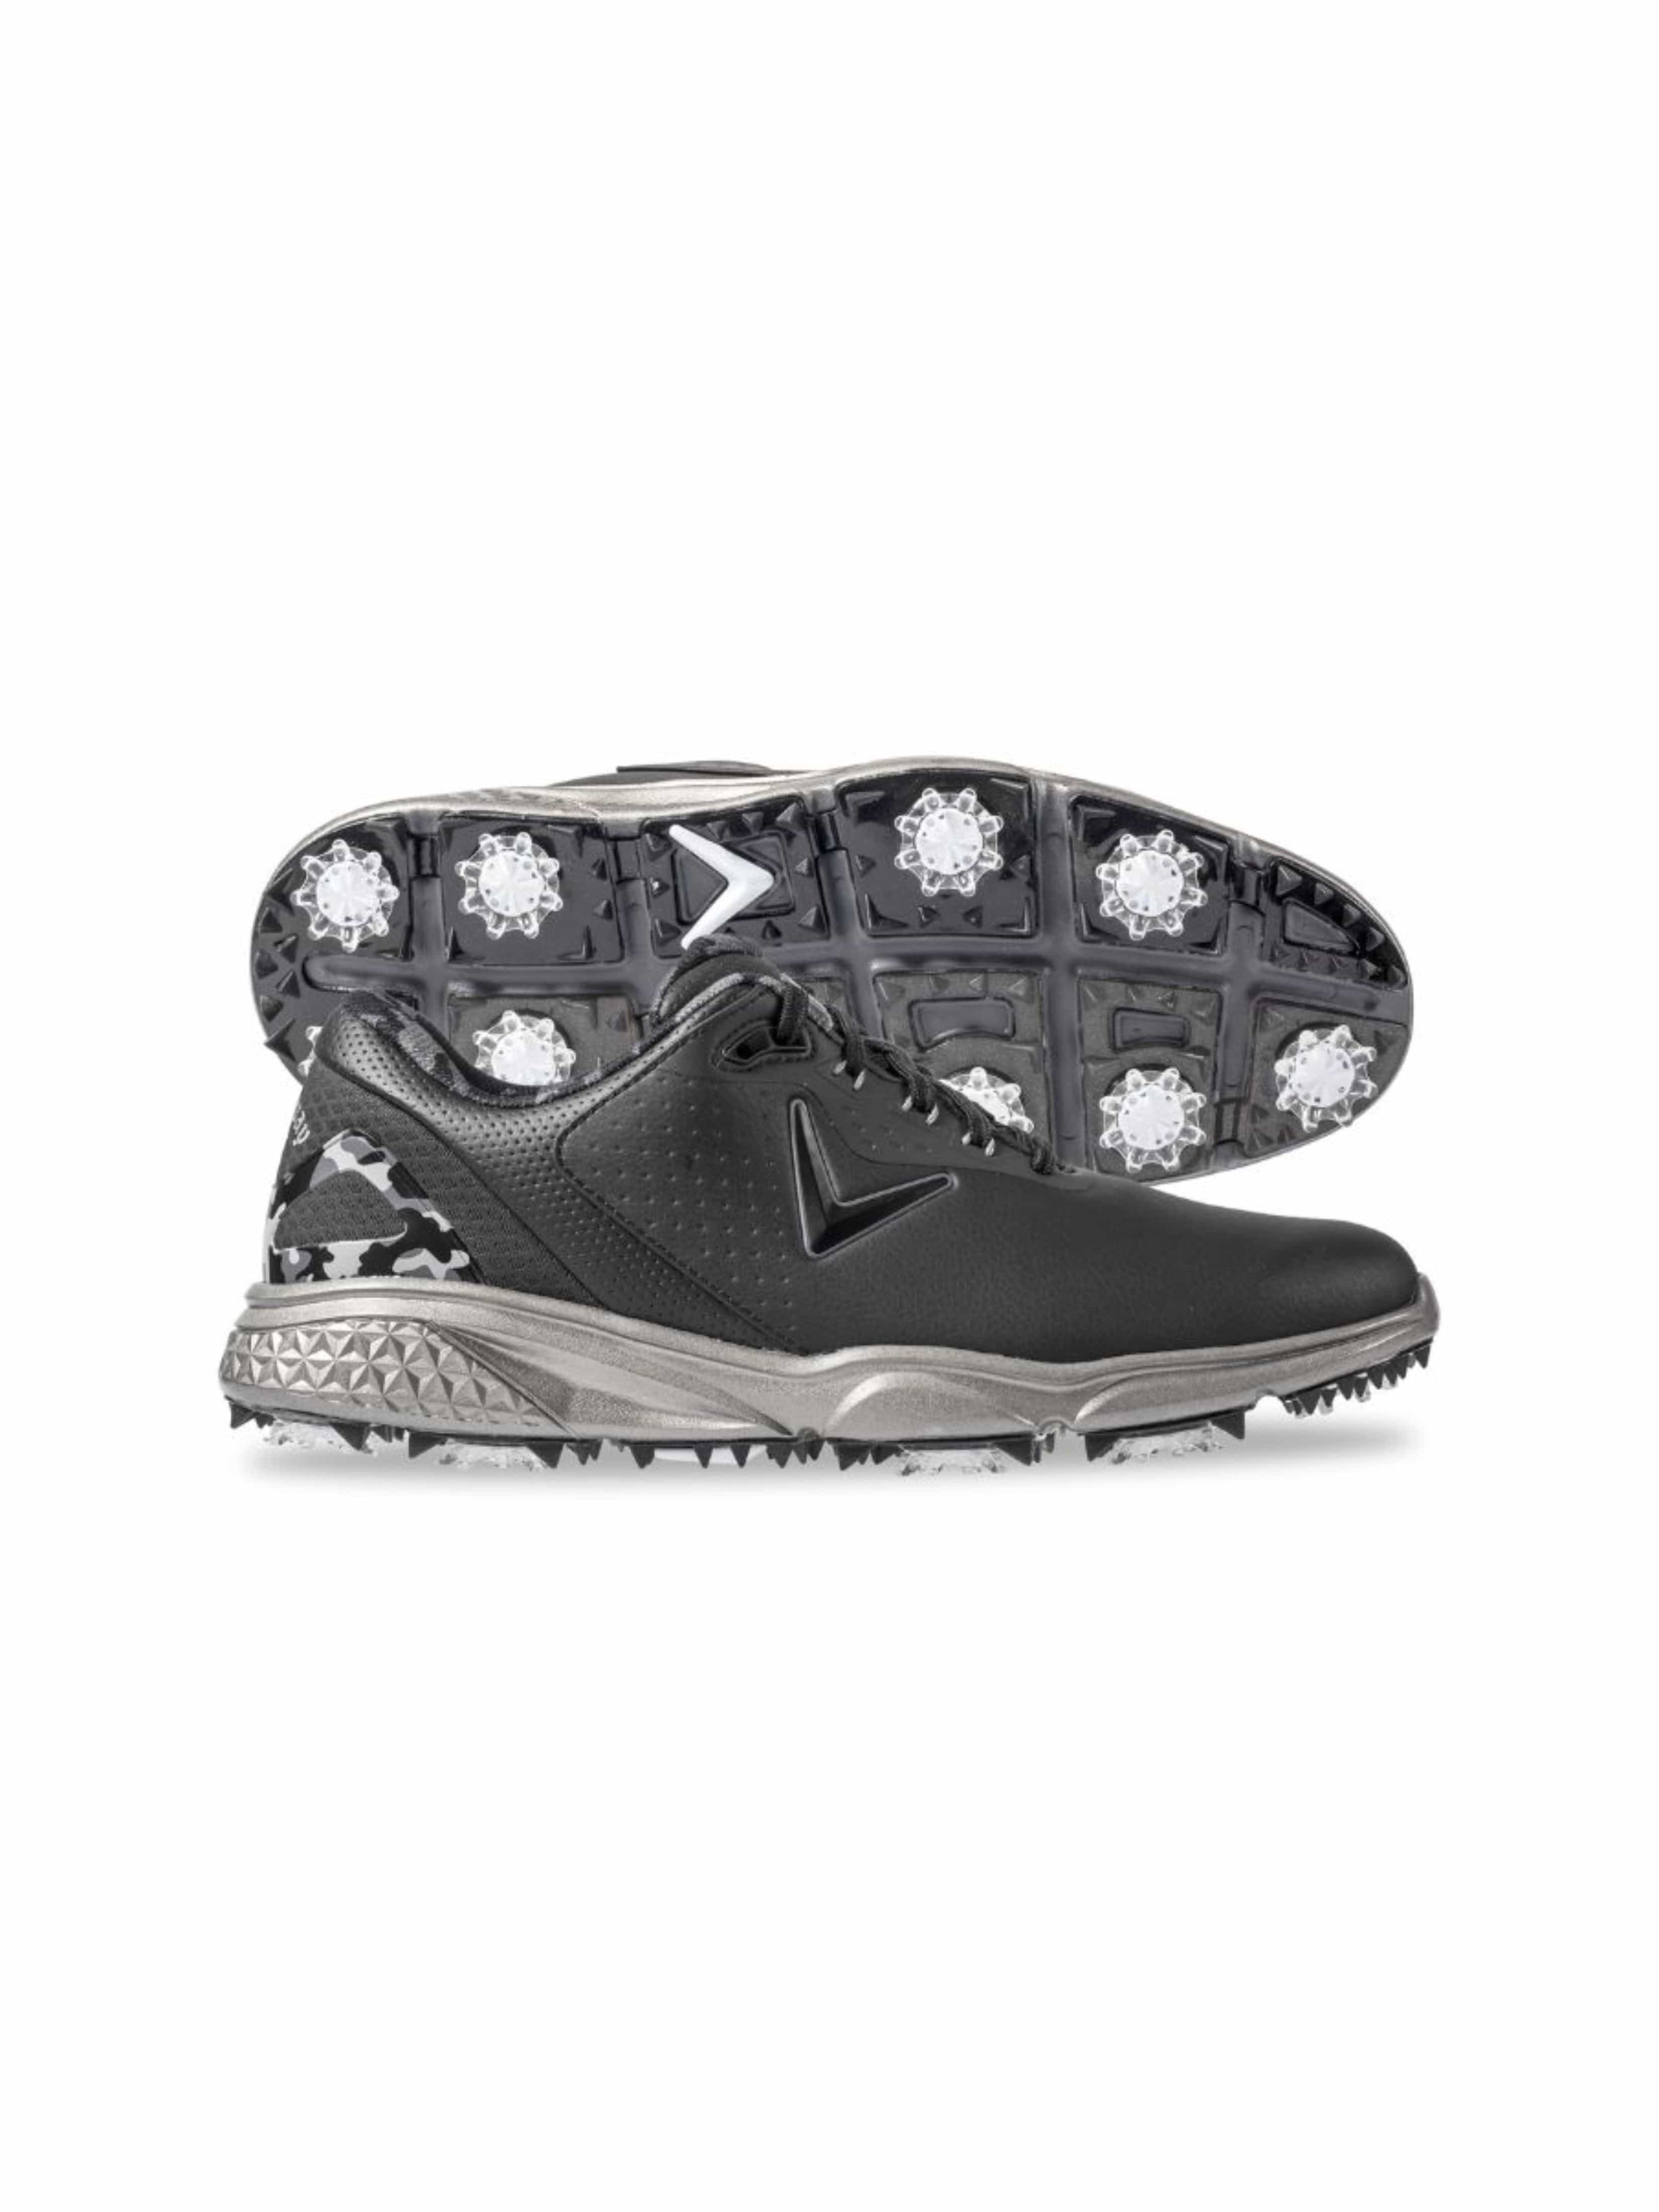 Callaway Apparel Mens Coronado V2 Golf Shoes, Size 9.5, Black, Polyurethane/Nylon | Golf Apparel Shop